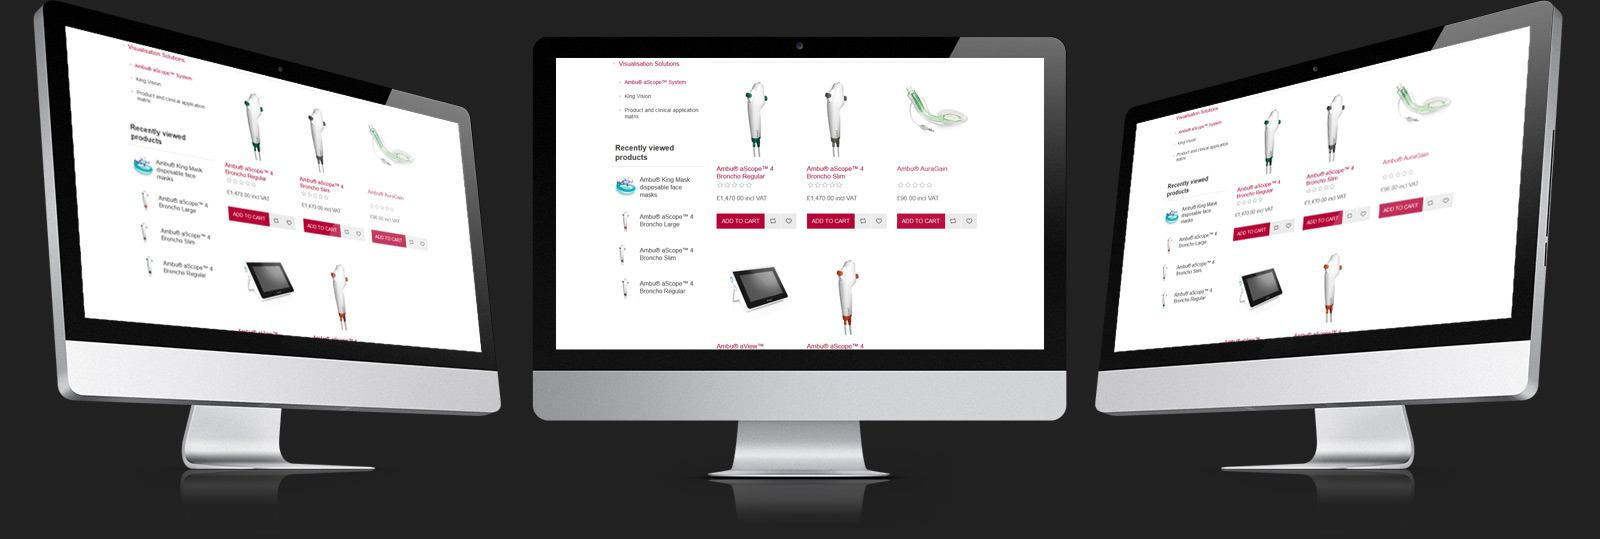 St Ives Web Design - Ambu Care Shop